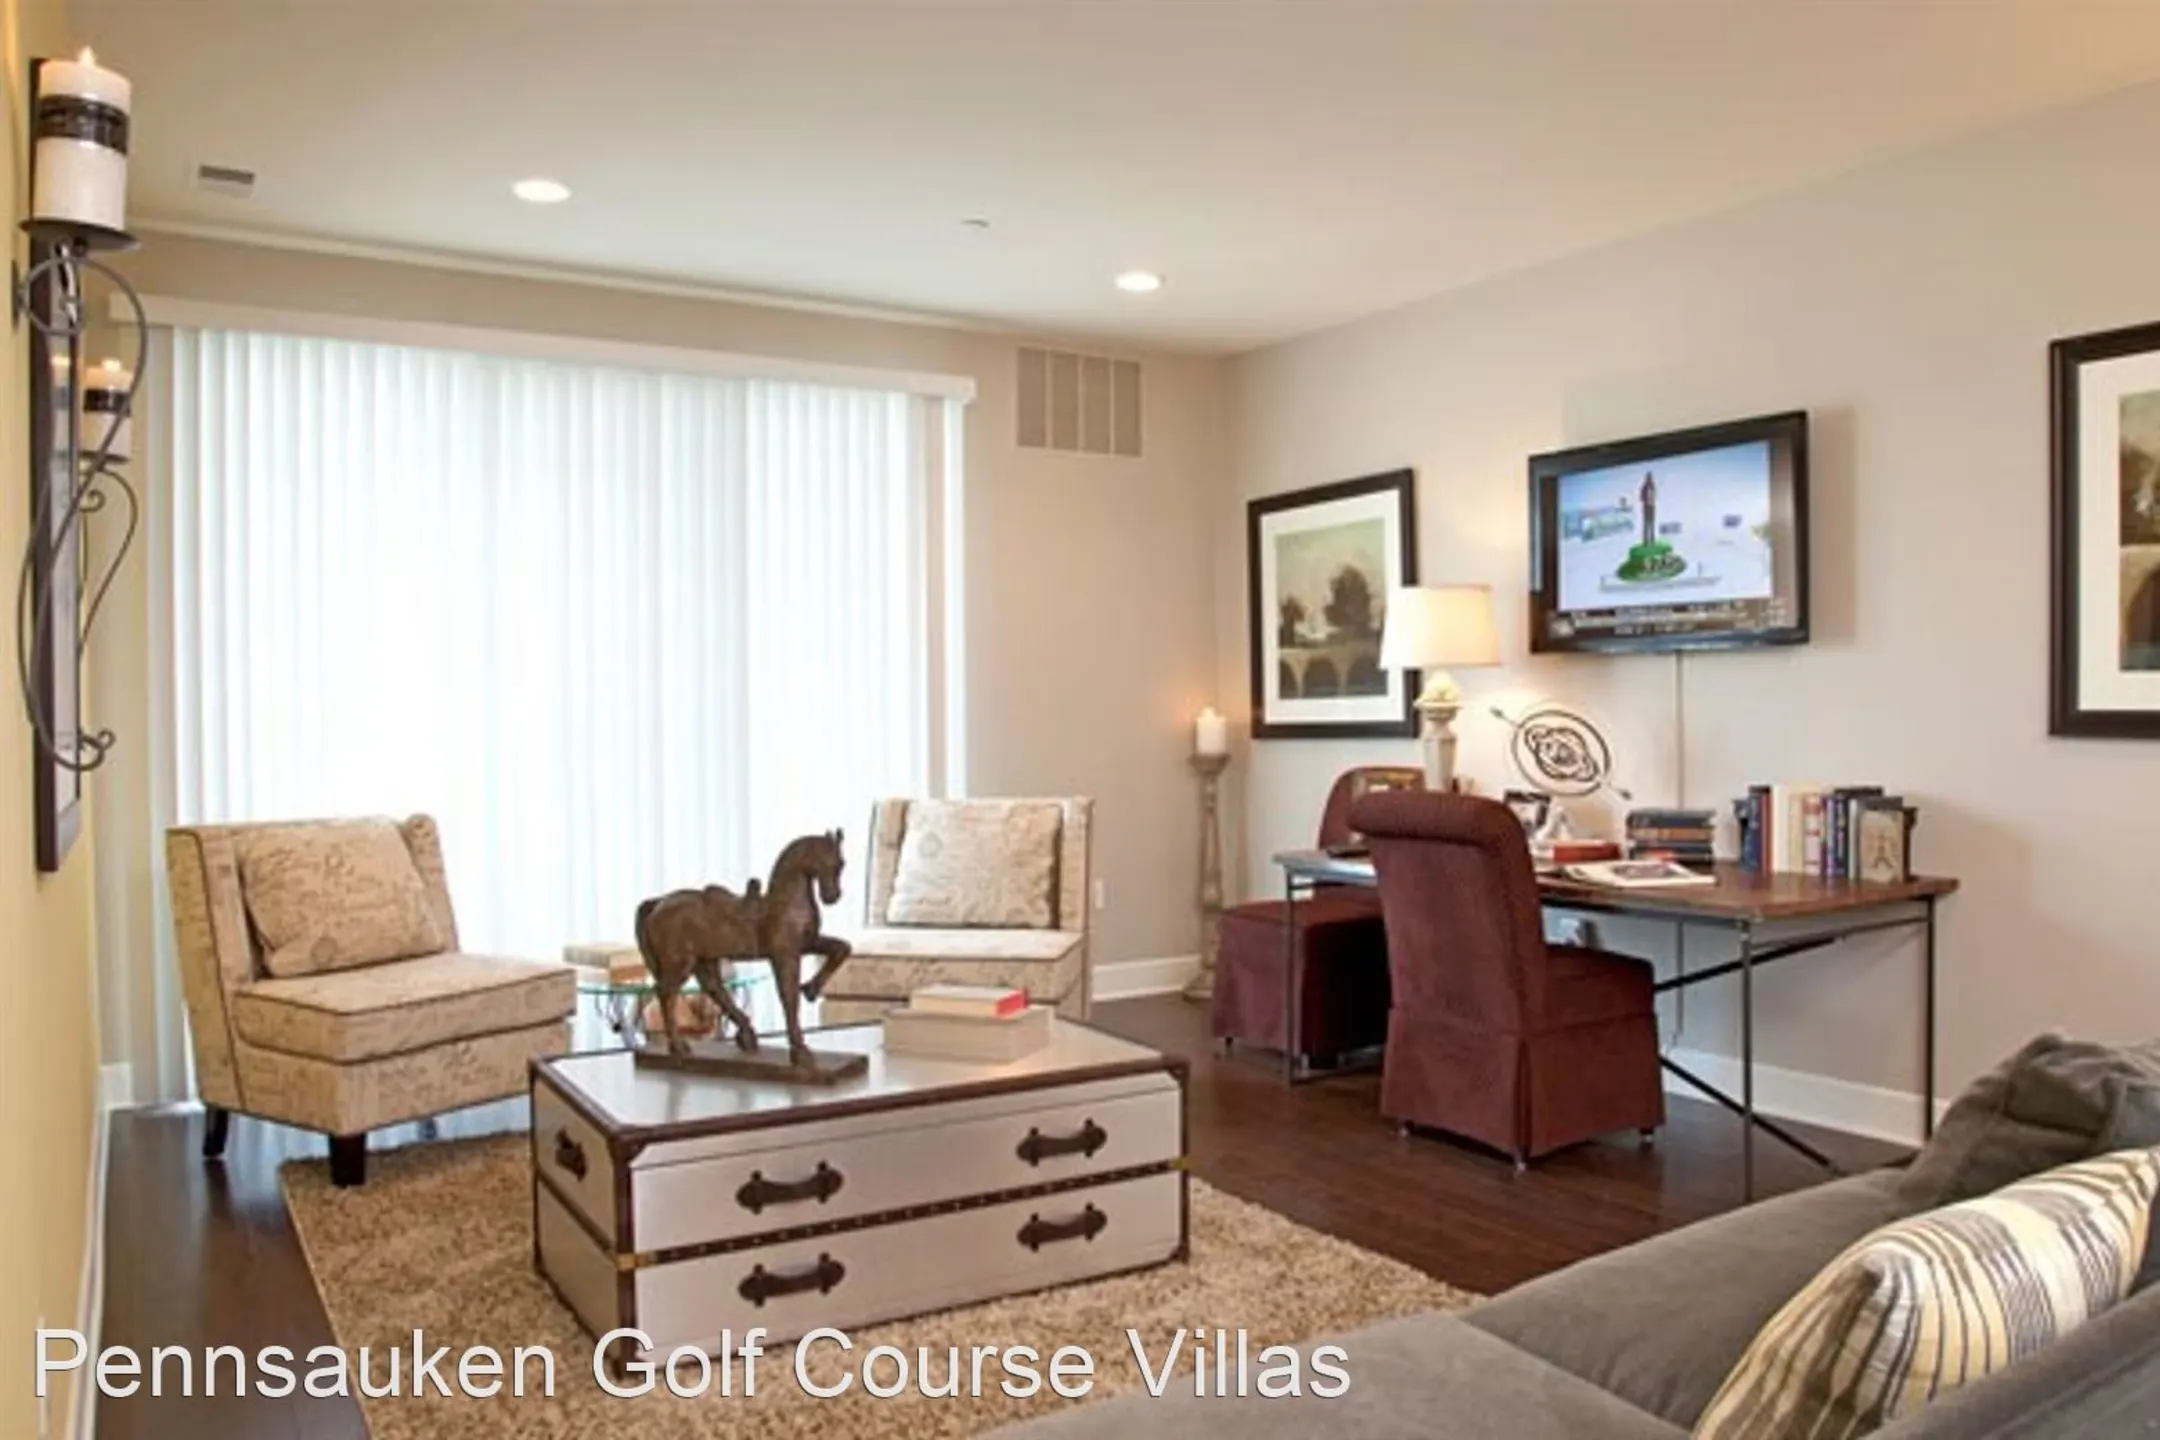 Living Room - Pennsauken Golf Course Villas - Pennsauken, NJ